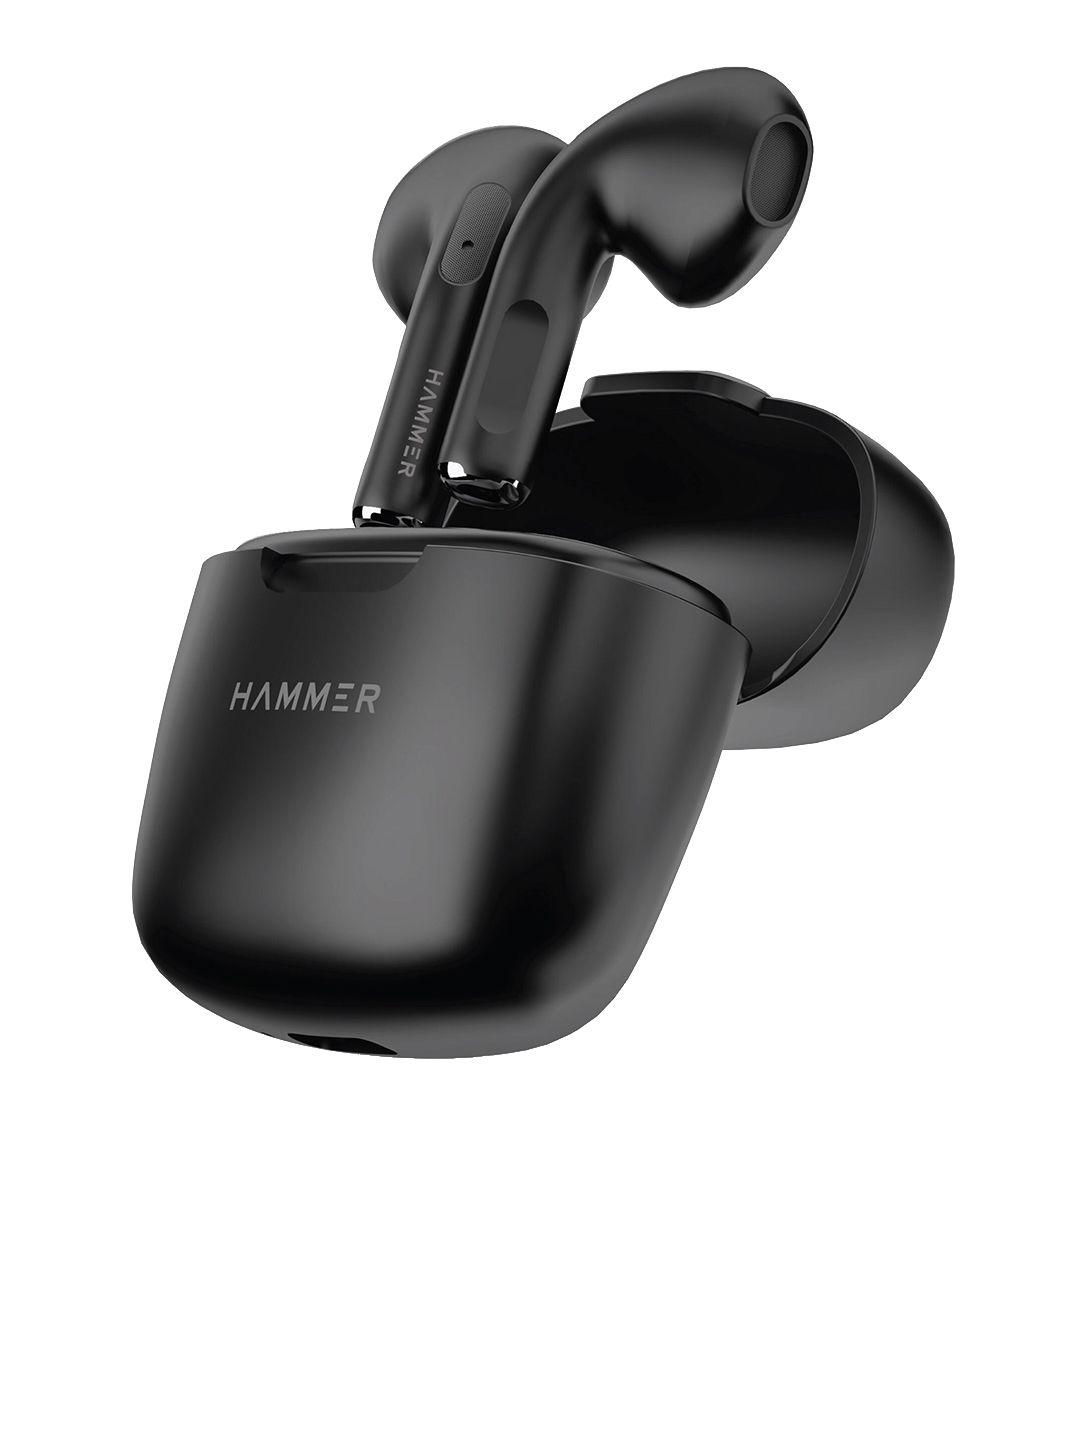 hammer true wireless earbuds with dual enc & digital display